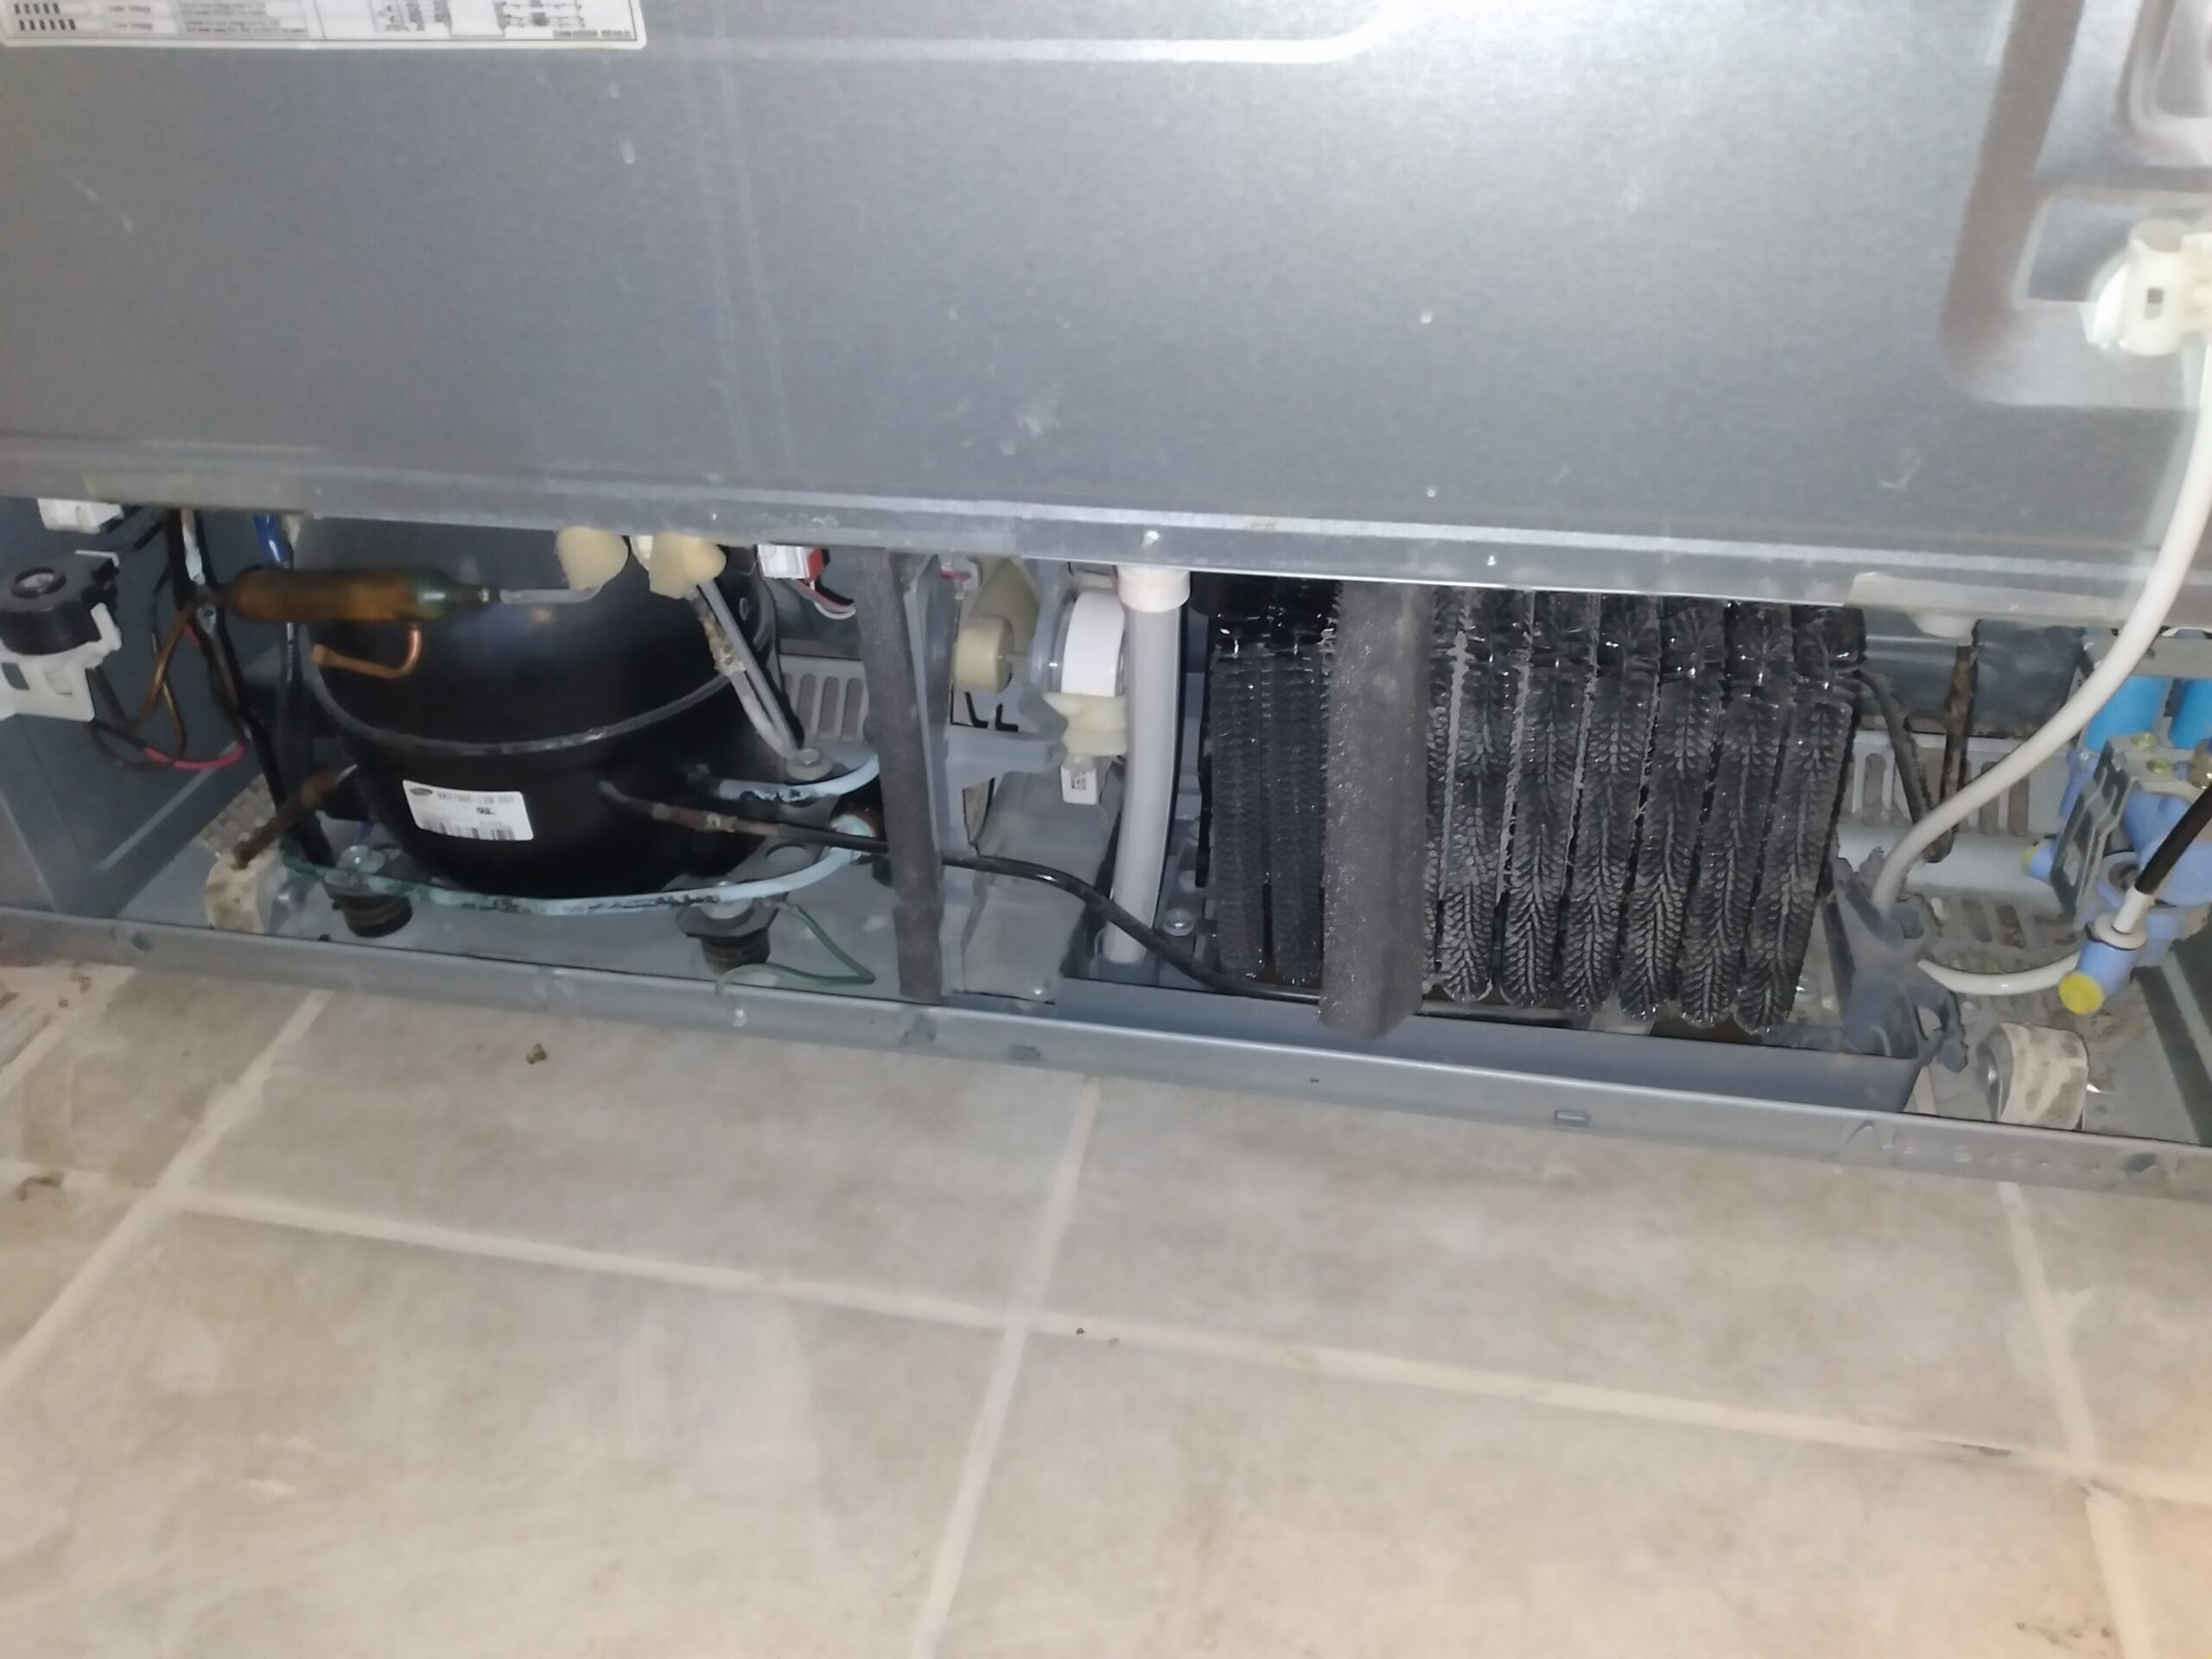 appliance repair refrigerator repair loud noise underneath twin falls trail meadow woods orlando fl 32824